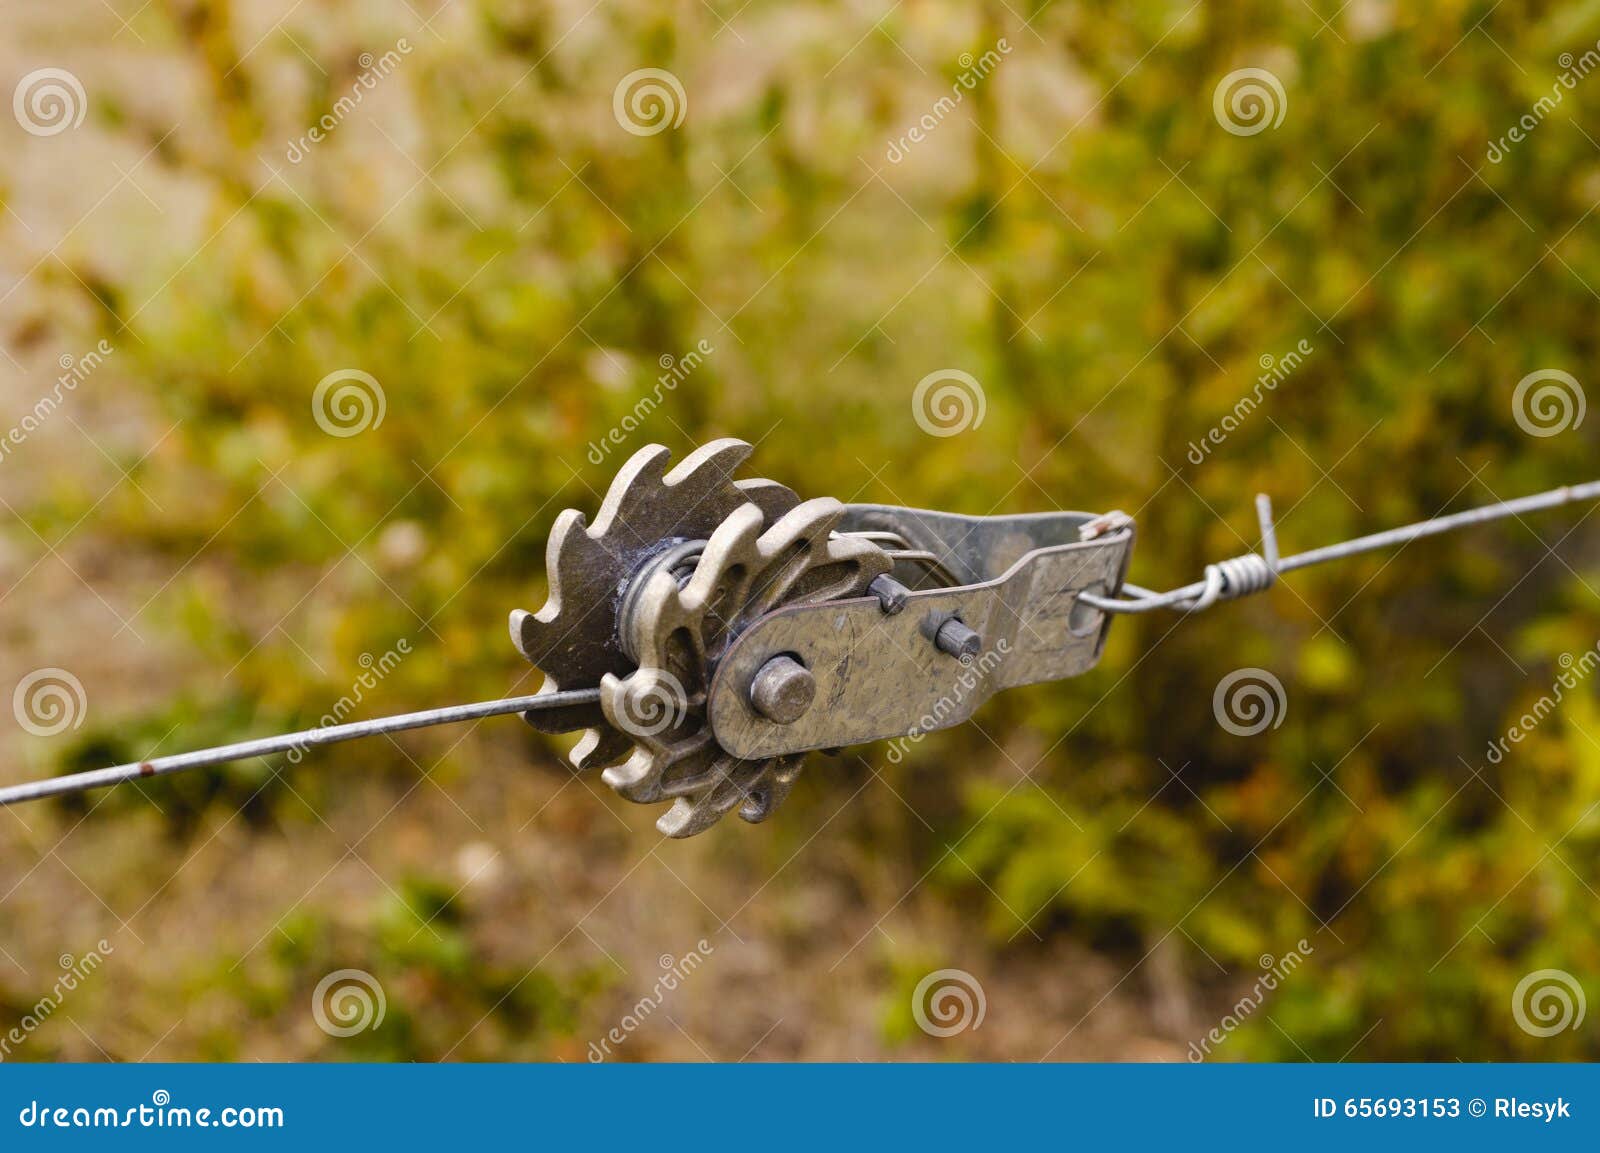 fence wire ratchet tightener